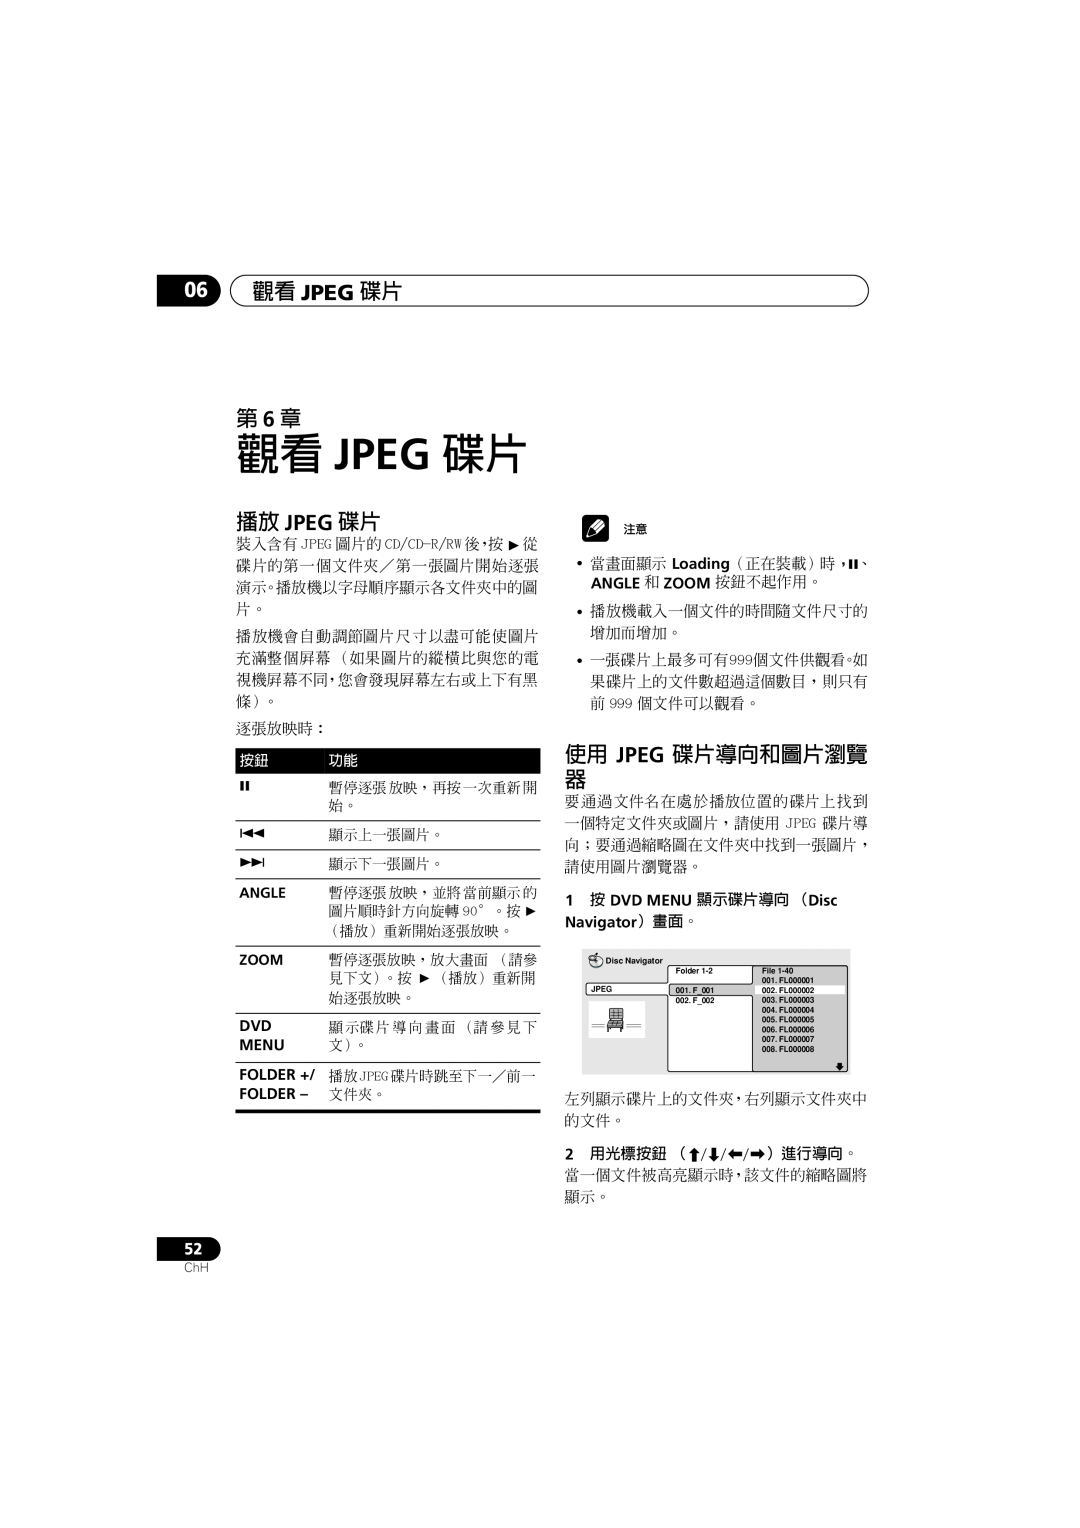 Pioneer S-DV900SW 觀看 Jpeg 碟片, 06觀看 JPEG 碟片 第 6 章, 播放 Jpeg 碟片, 使用 Jpeg 碟片導向和圖片瀏覽 器, 1按 DVD MENU 顯示碟片導向 （Disc Navigator）畫面。 